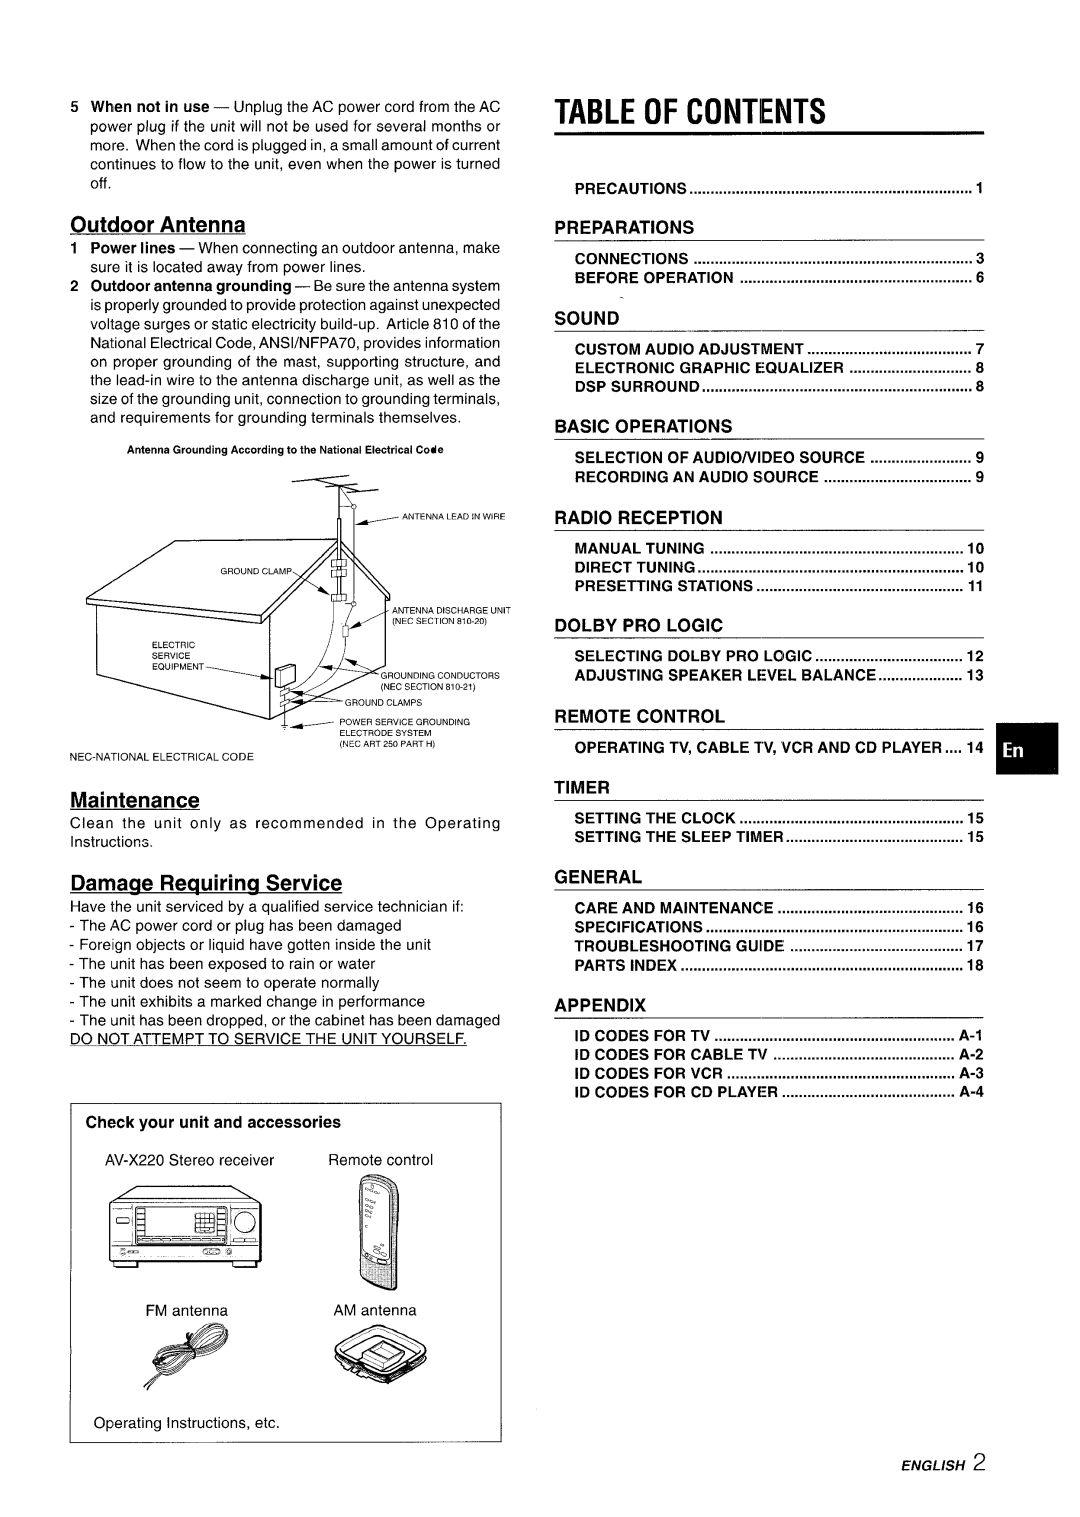 Aiwa AV-X220 manual =lFANTENNALEAD, Table Of Contents, Outdoor Antenna, Maintenance, Damaqe Requirinq Service, Preparations 